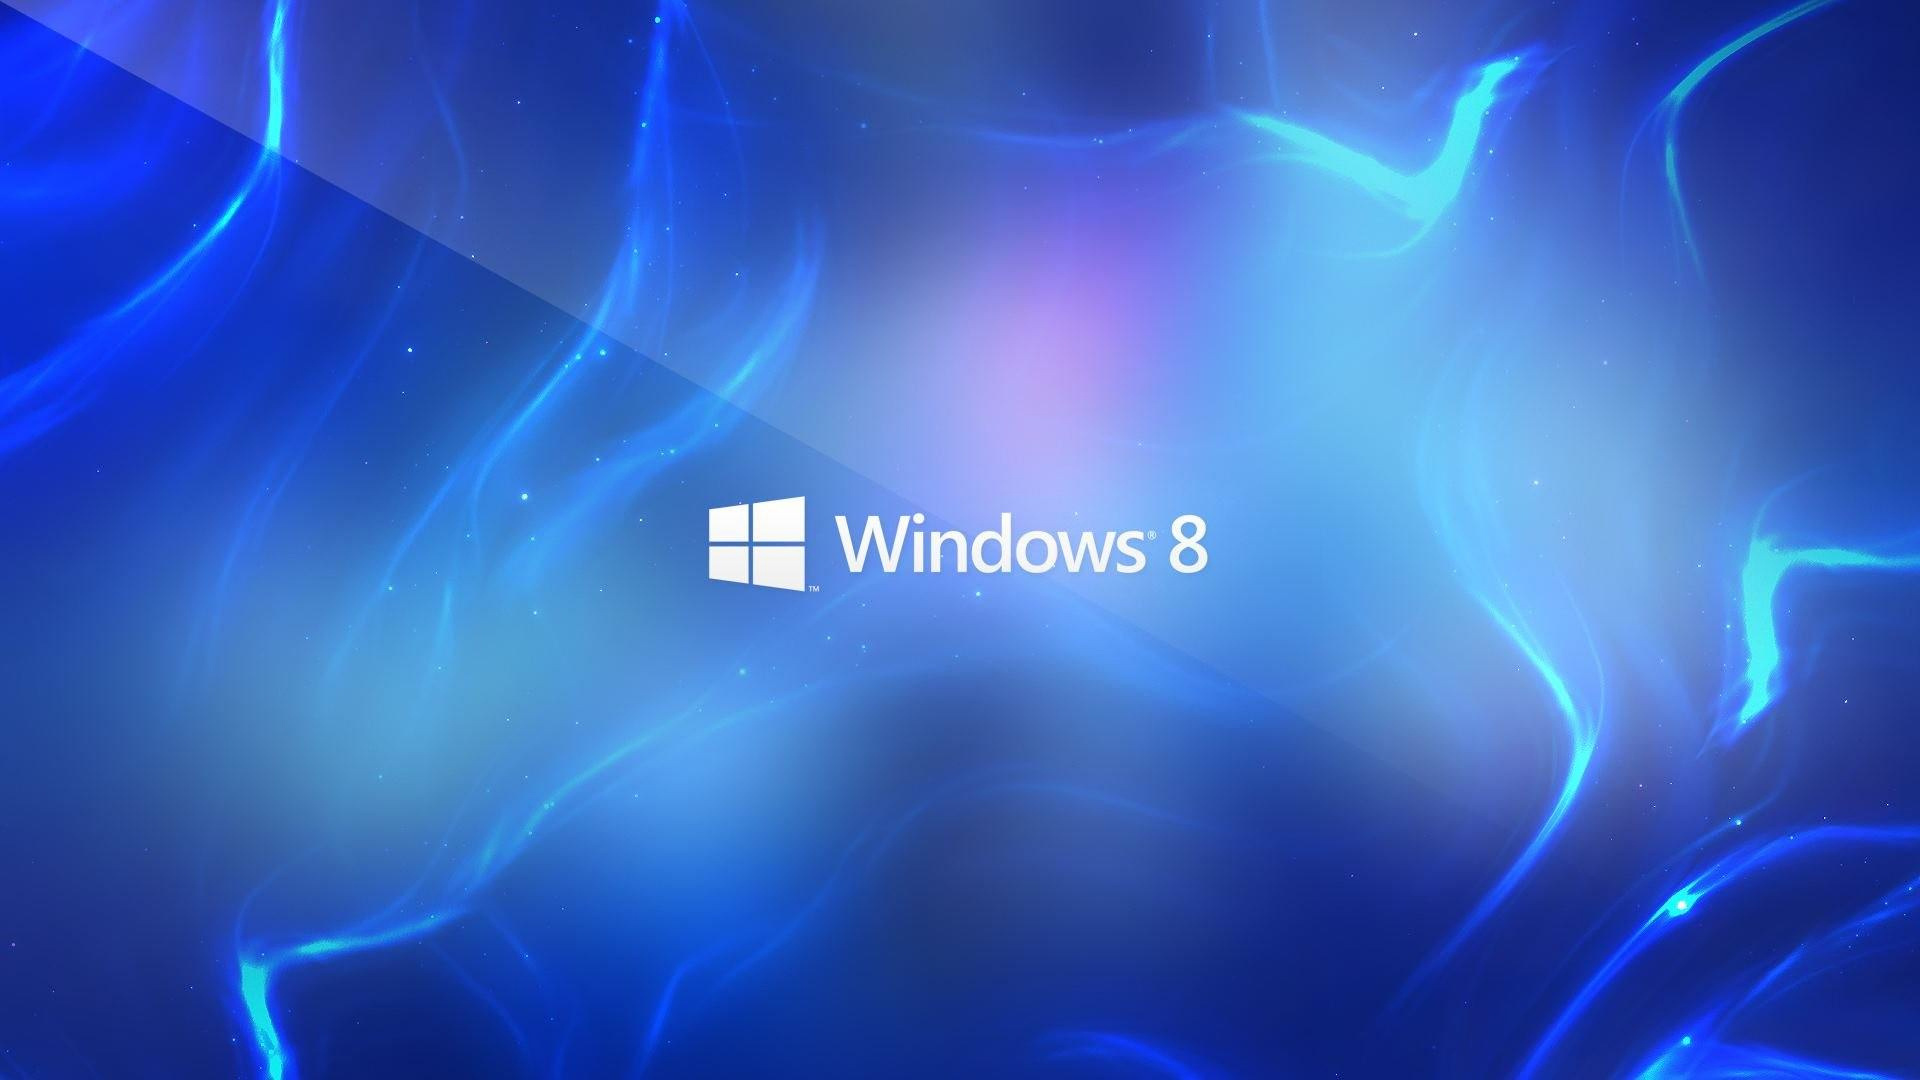 Windows 8, Microsoft Windows, Blue, Electric Blue, Light. Wallpaper in 1920x1080 Resolution